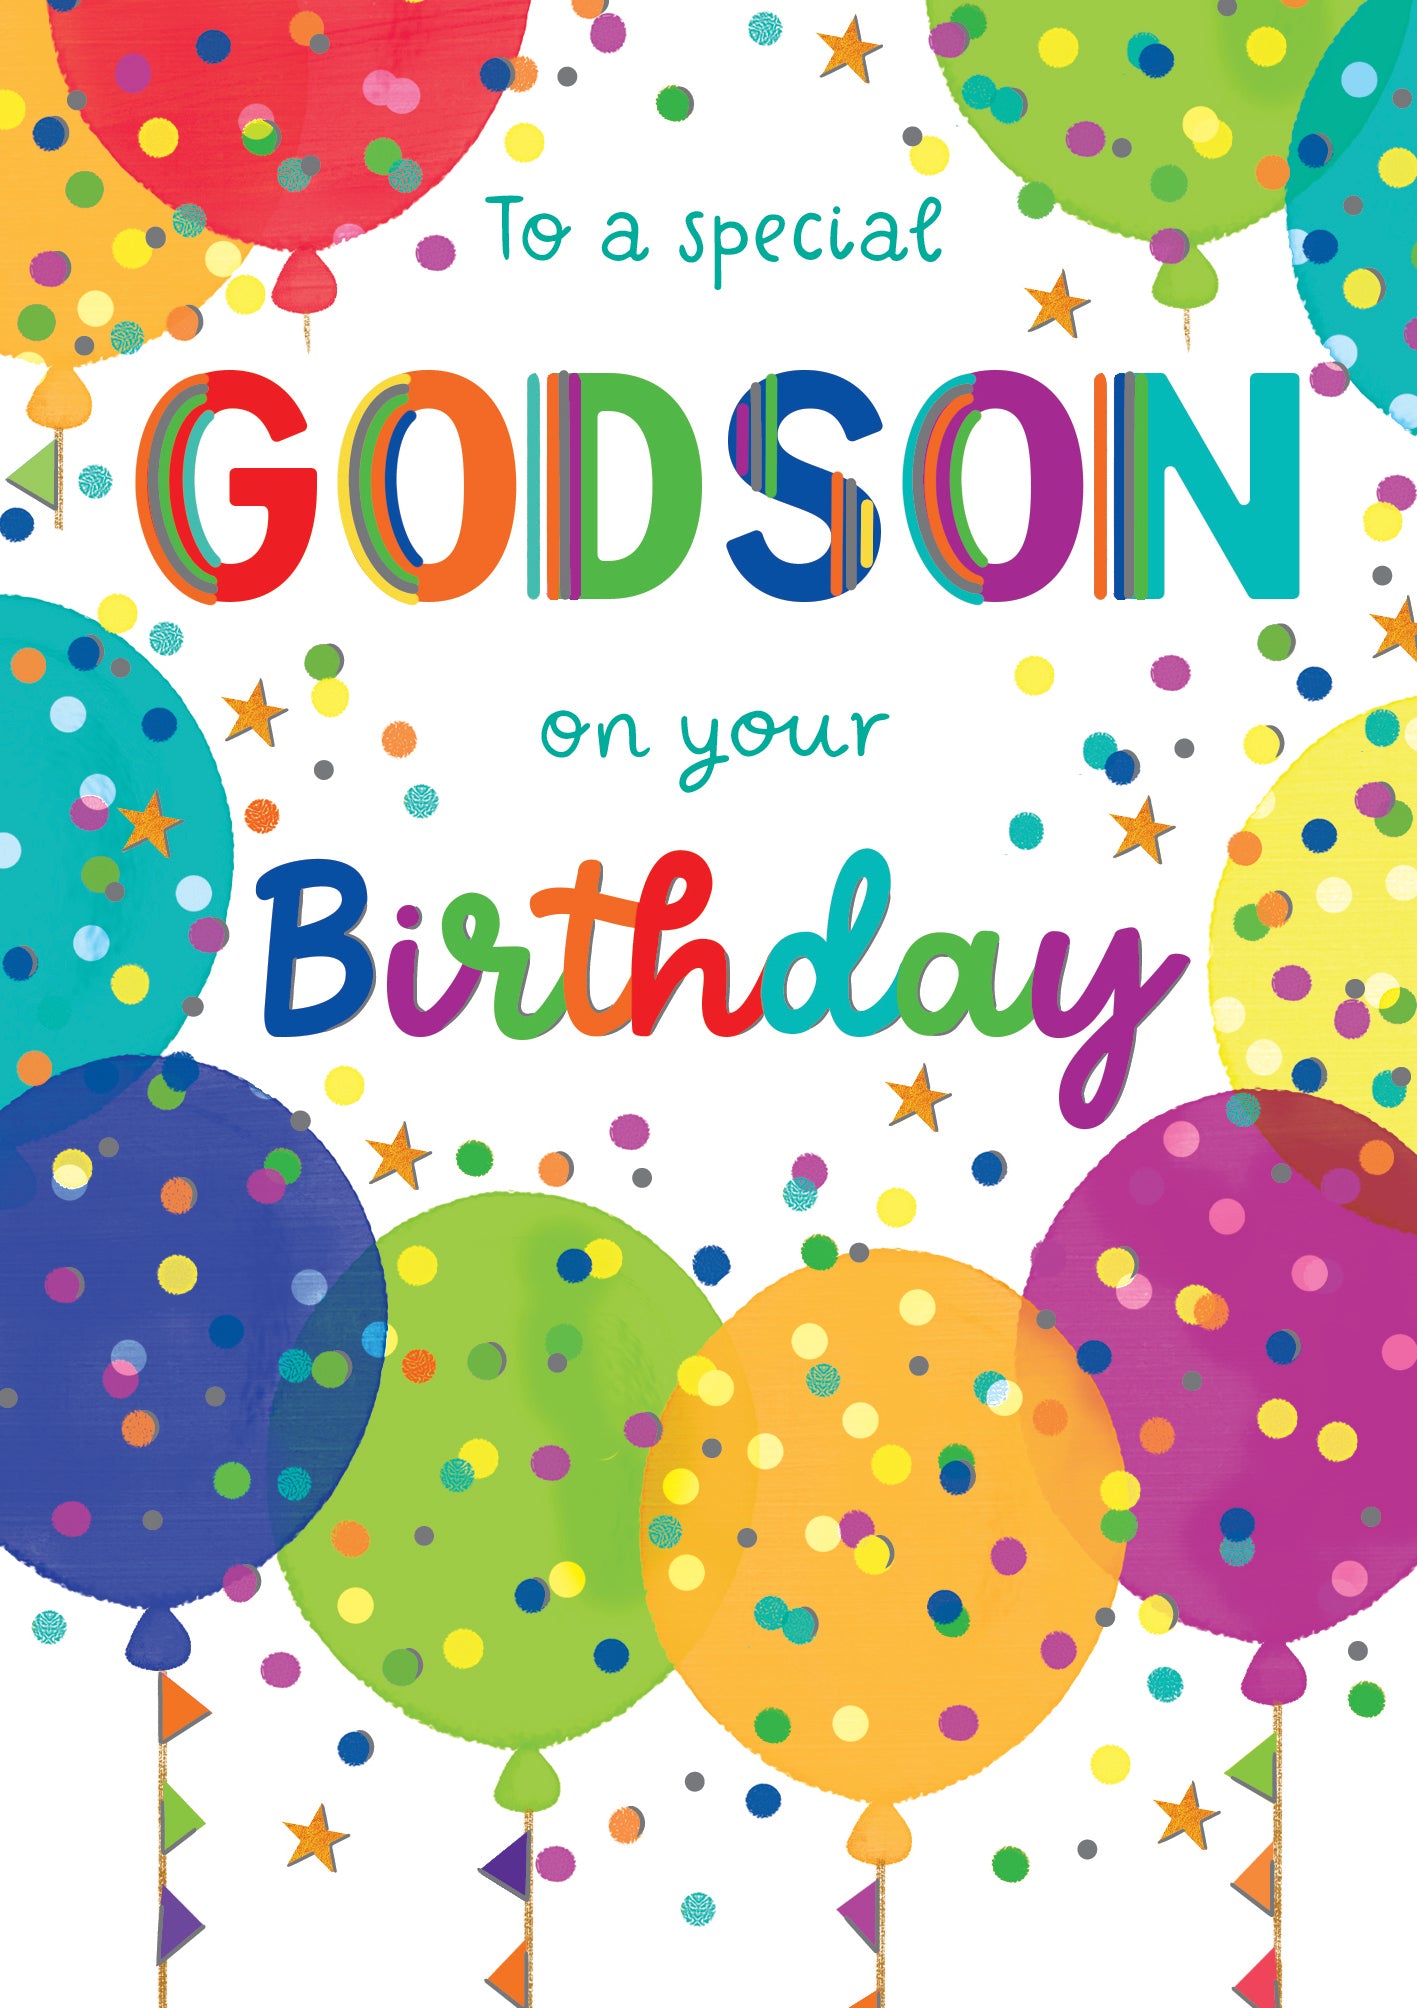 Godson Balloons Birthday Card from Penny Black